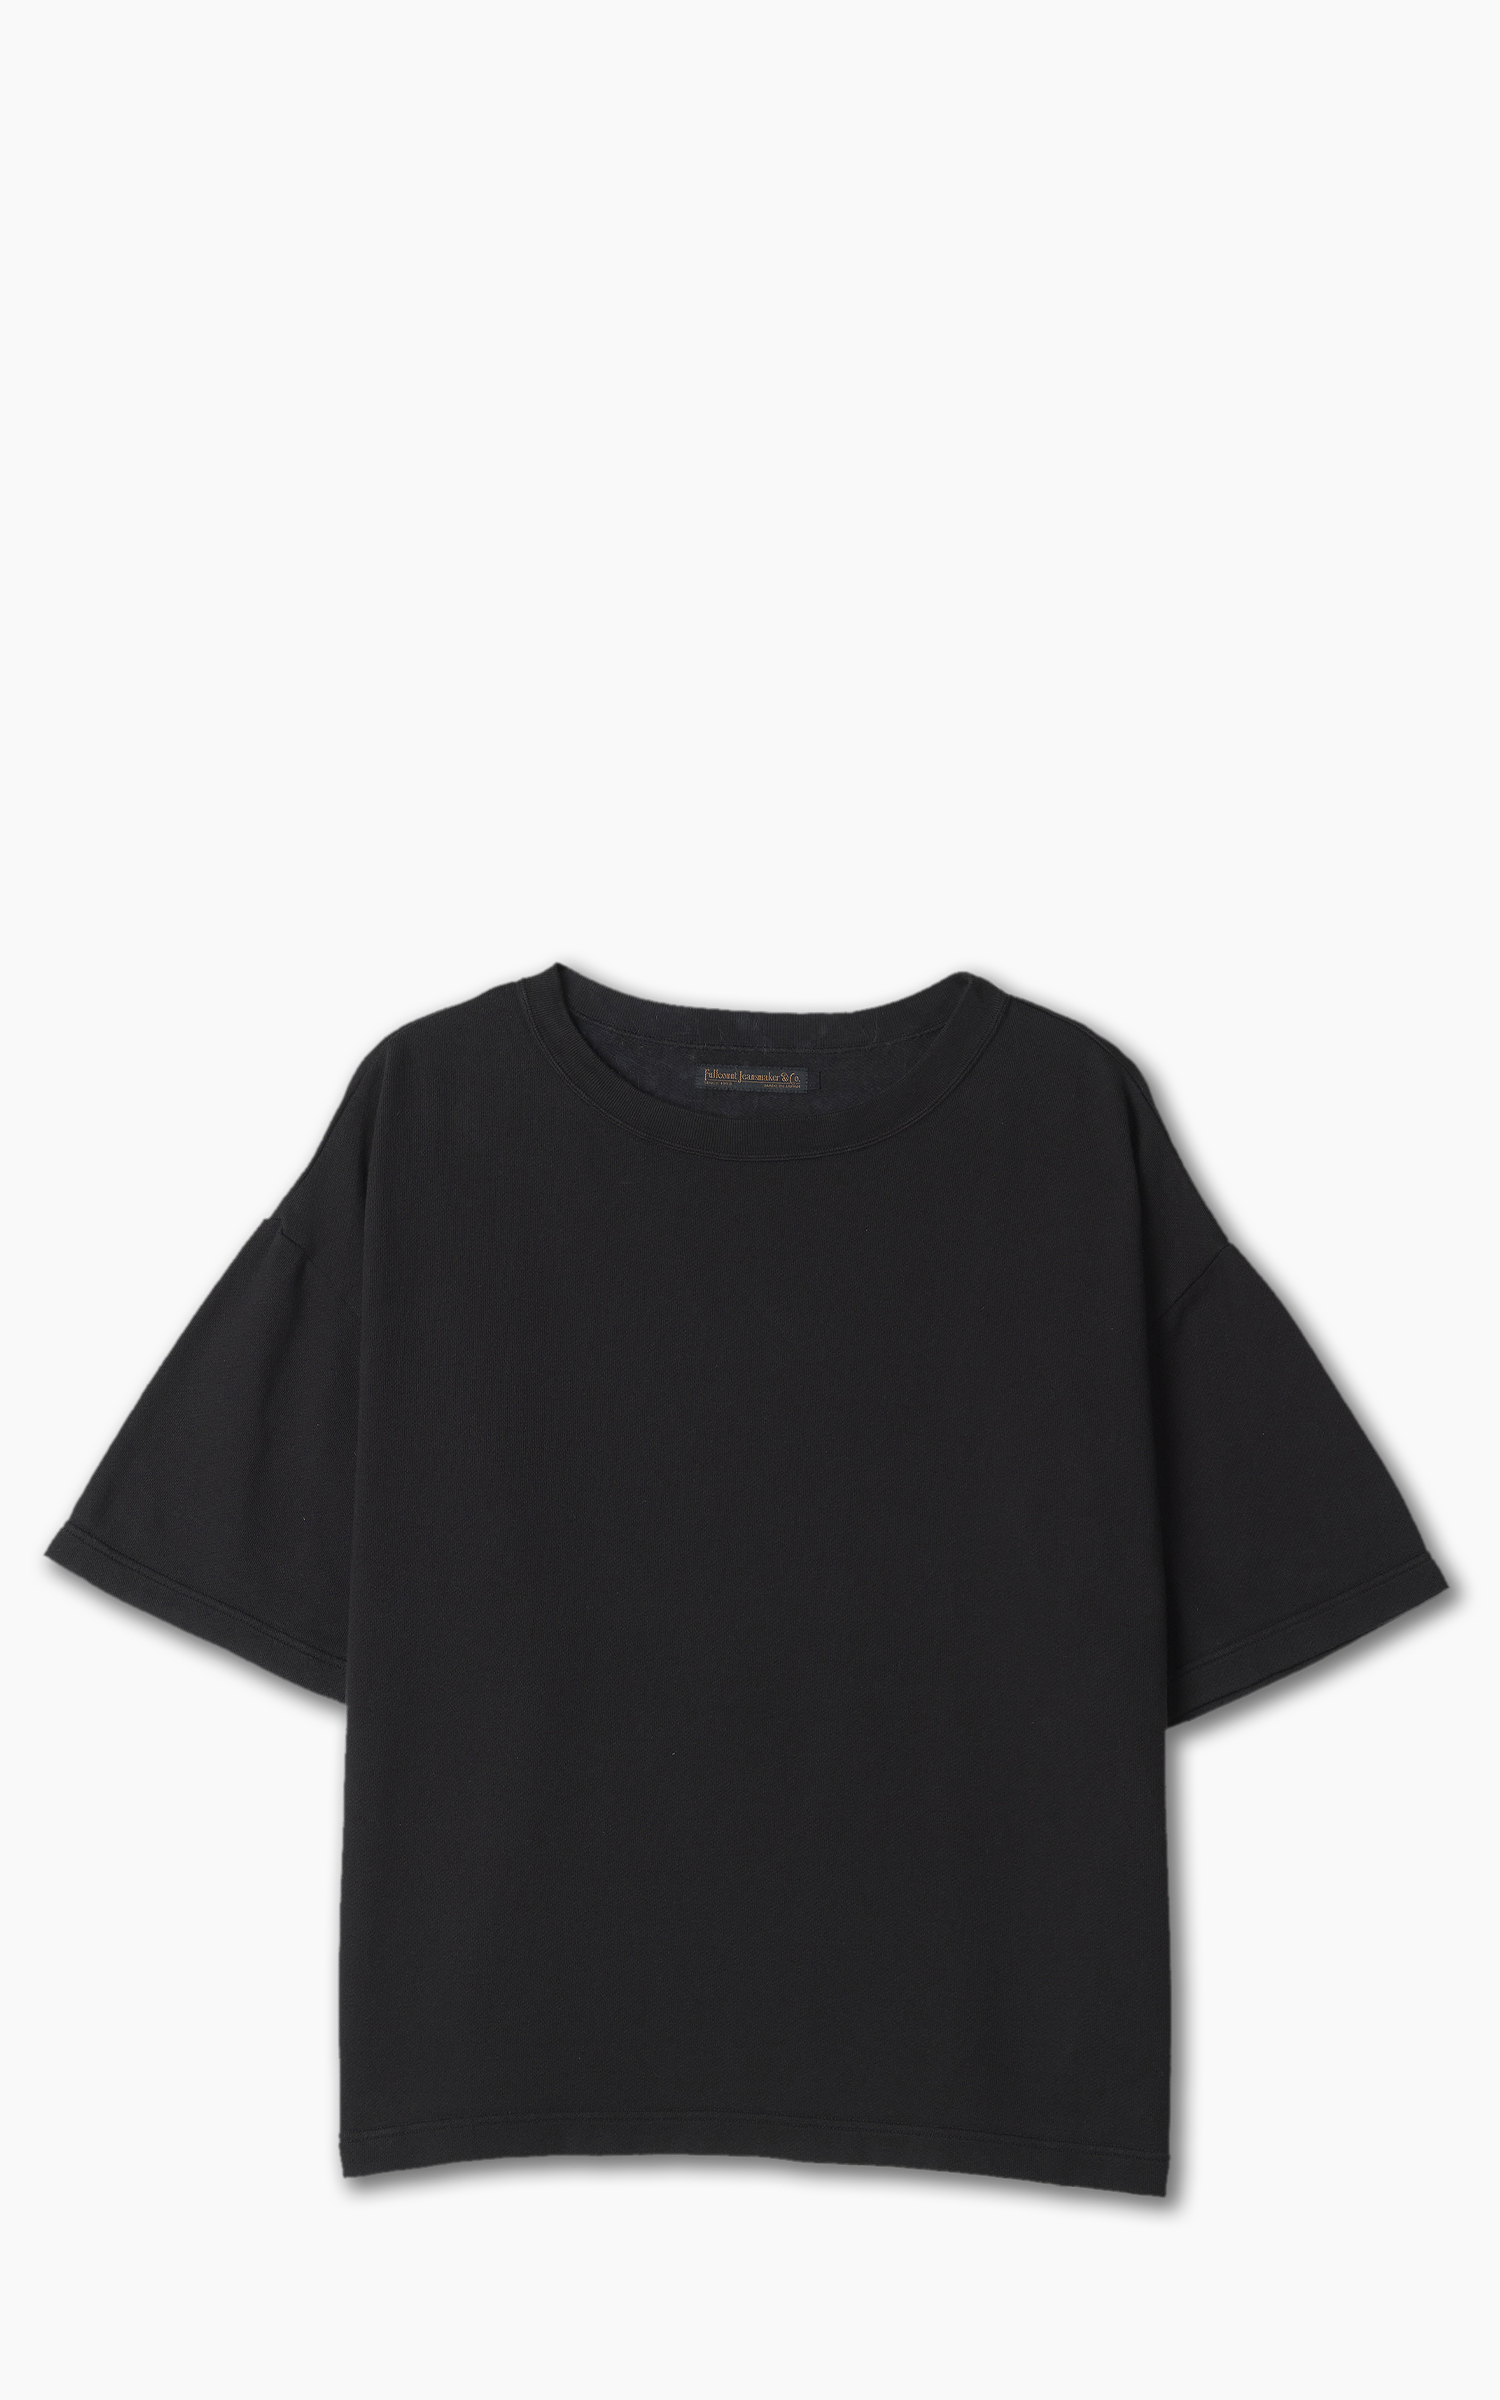 Fullcount 3762 Relax Fit Half Sleeve Sweatshirt Ink Black | Cultizm